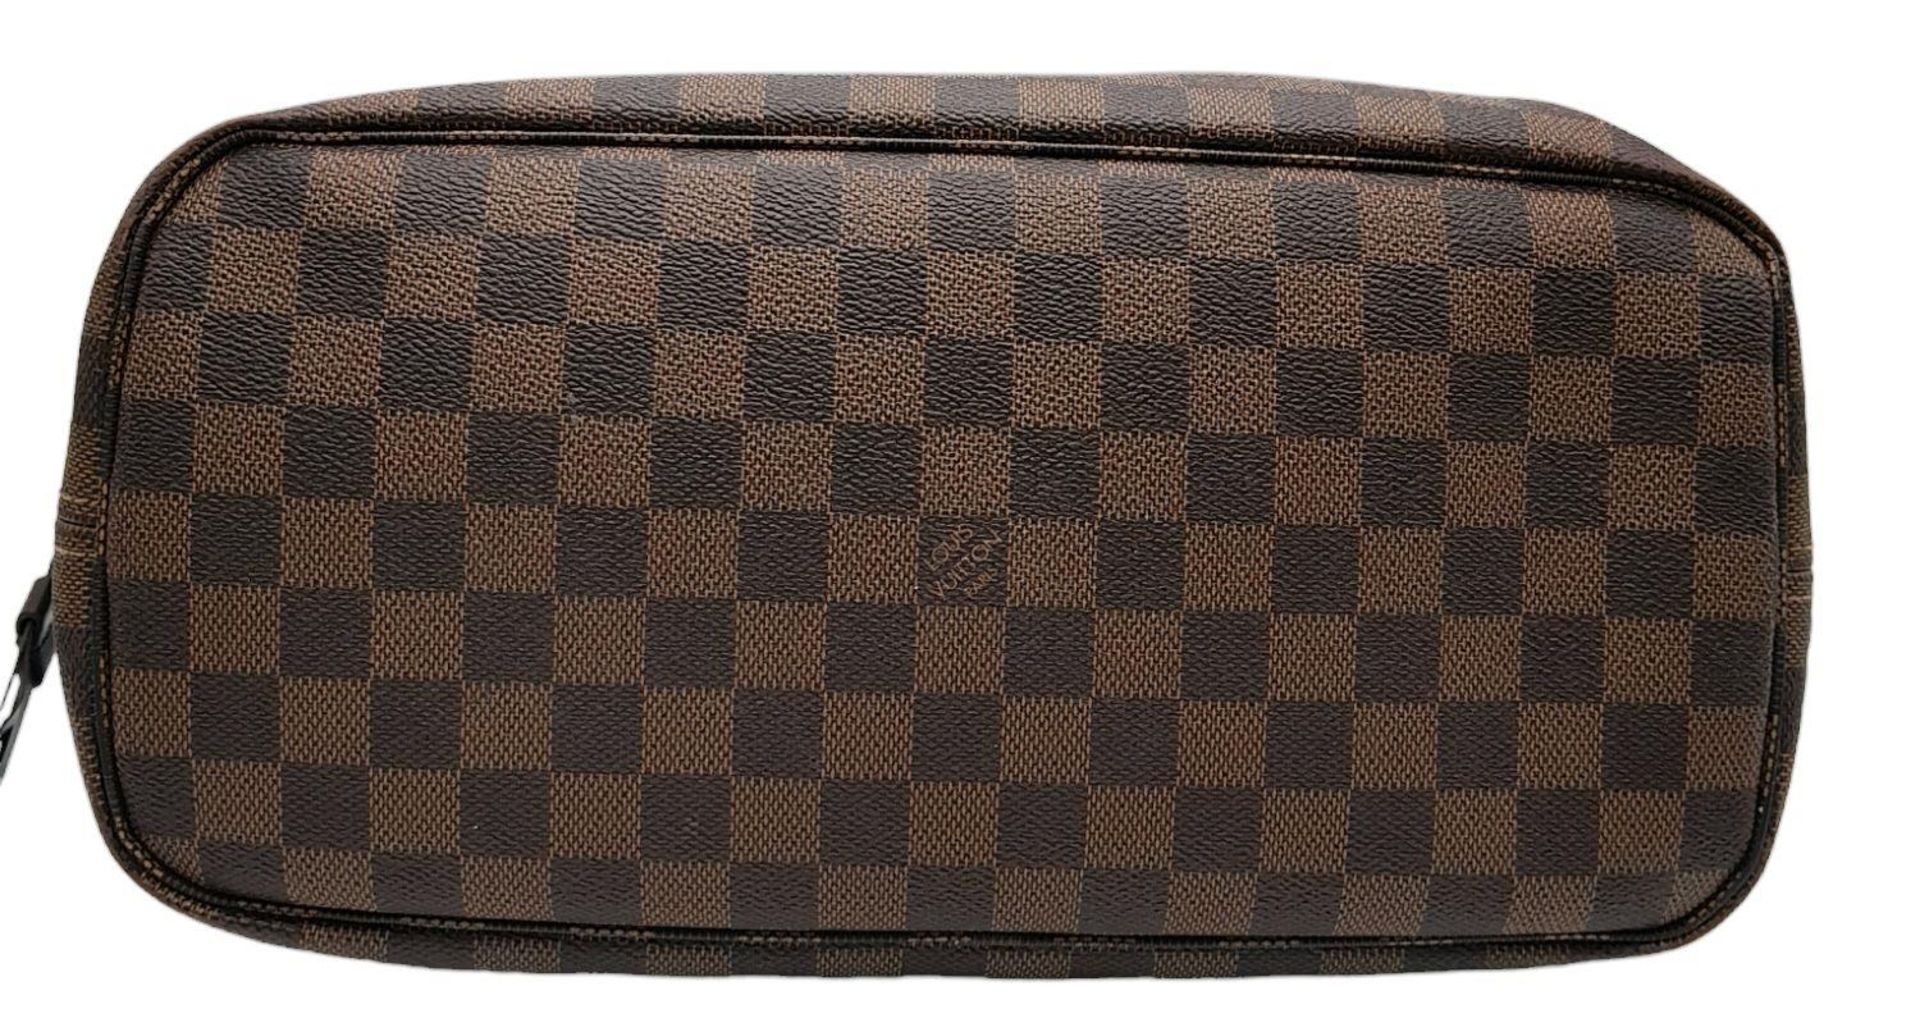 A Louis Vuitton Neverfull Damier Ebene Bag. Coated canvas exterior with leather trim, gold-toned - Bild 4 aus 12